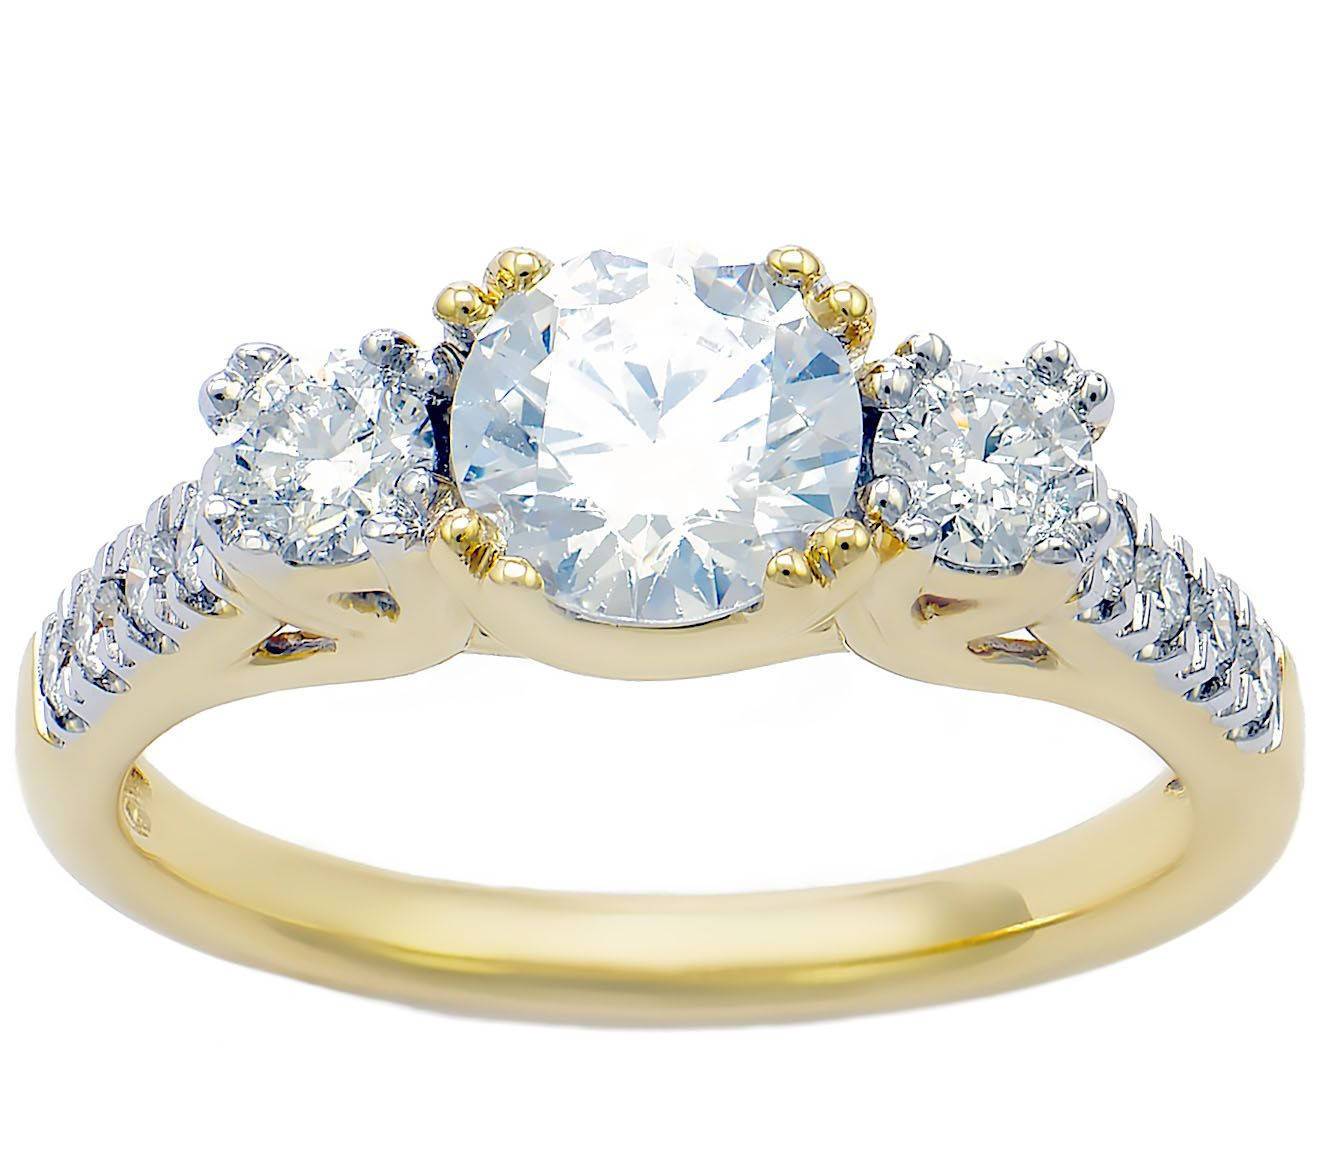 Qvc Wedding Rings
 3 Stone Diamond Bridal Ring 14K 1 50 cttw by Affinity